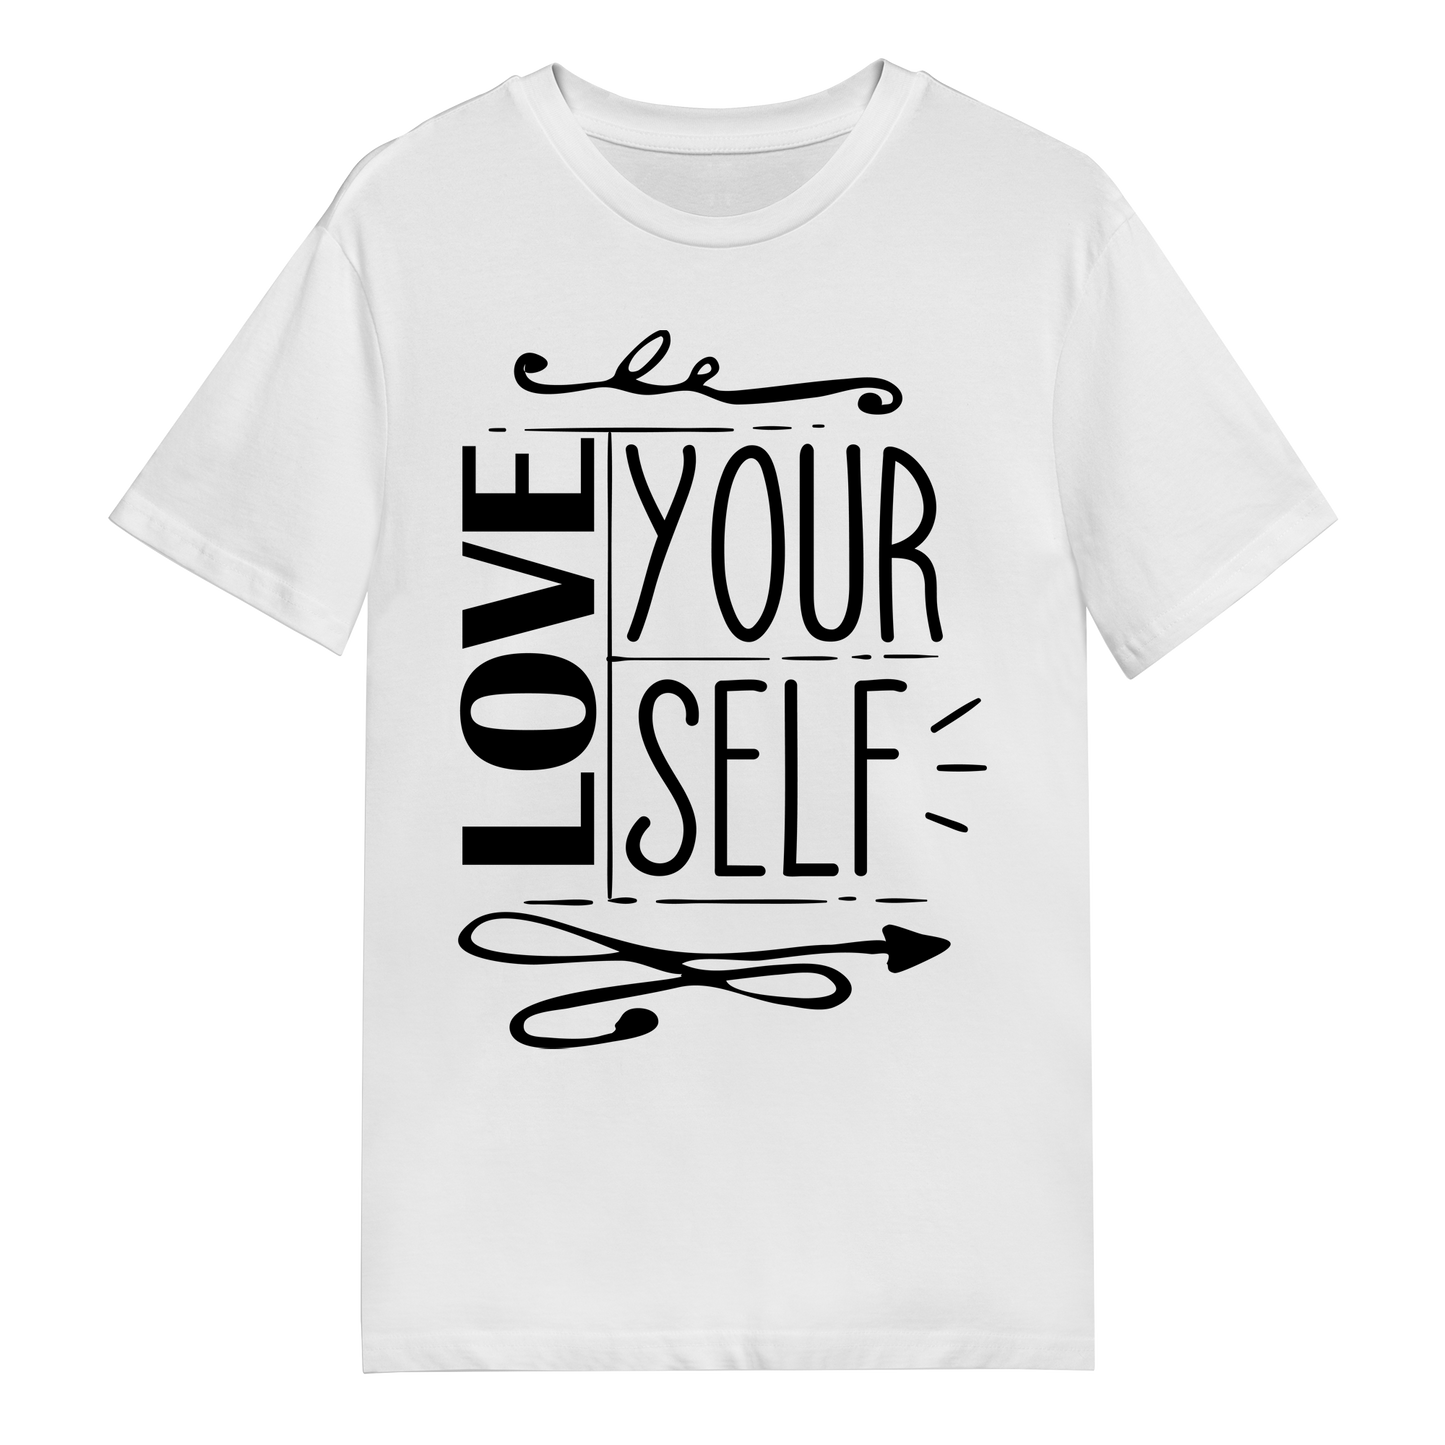 Men's T-Shirt - Love Your Self